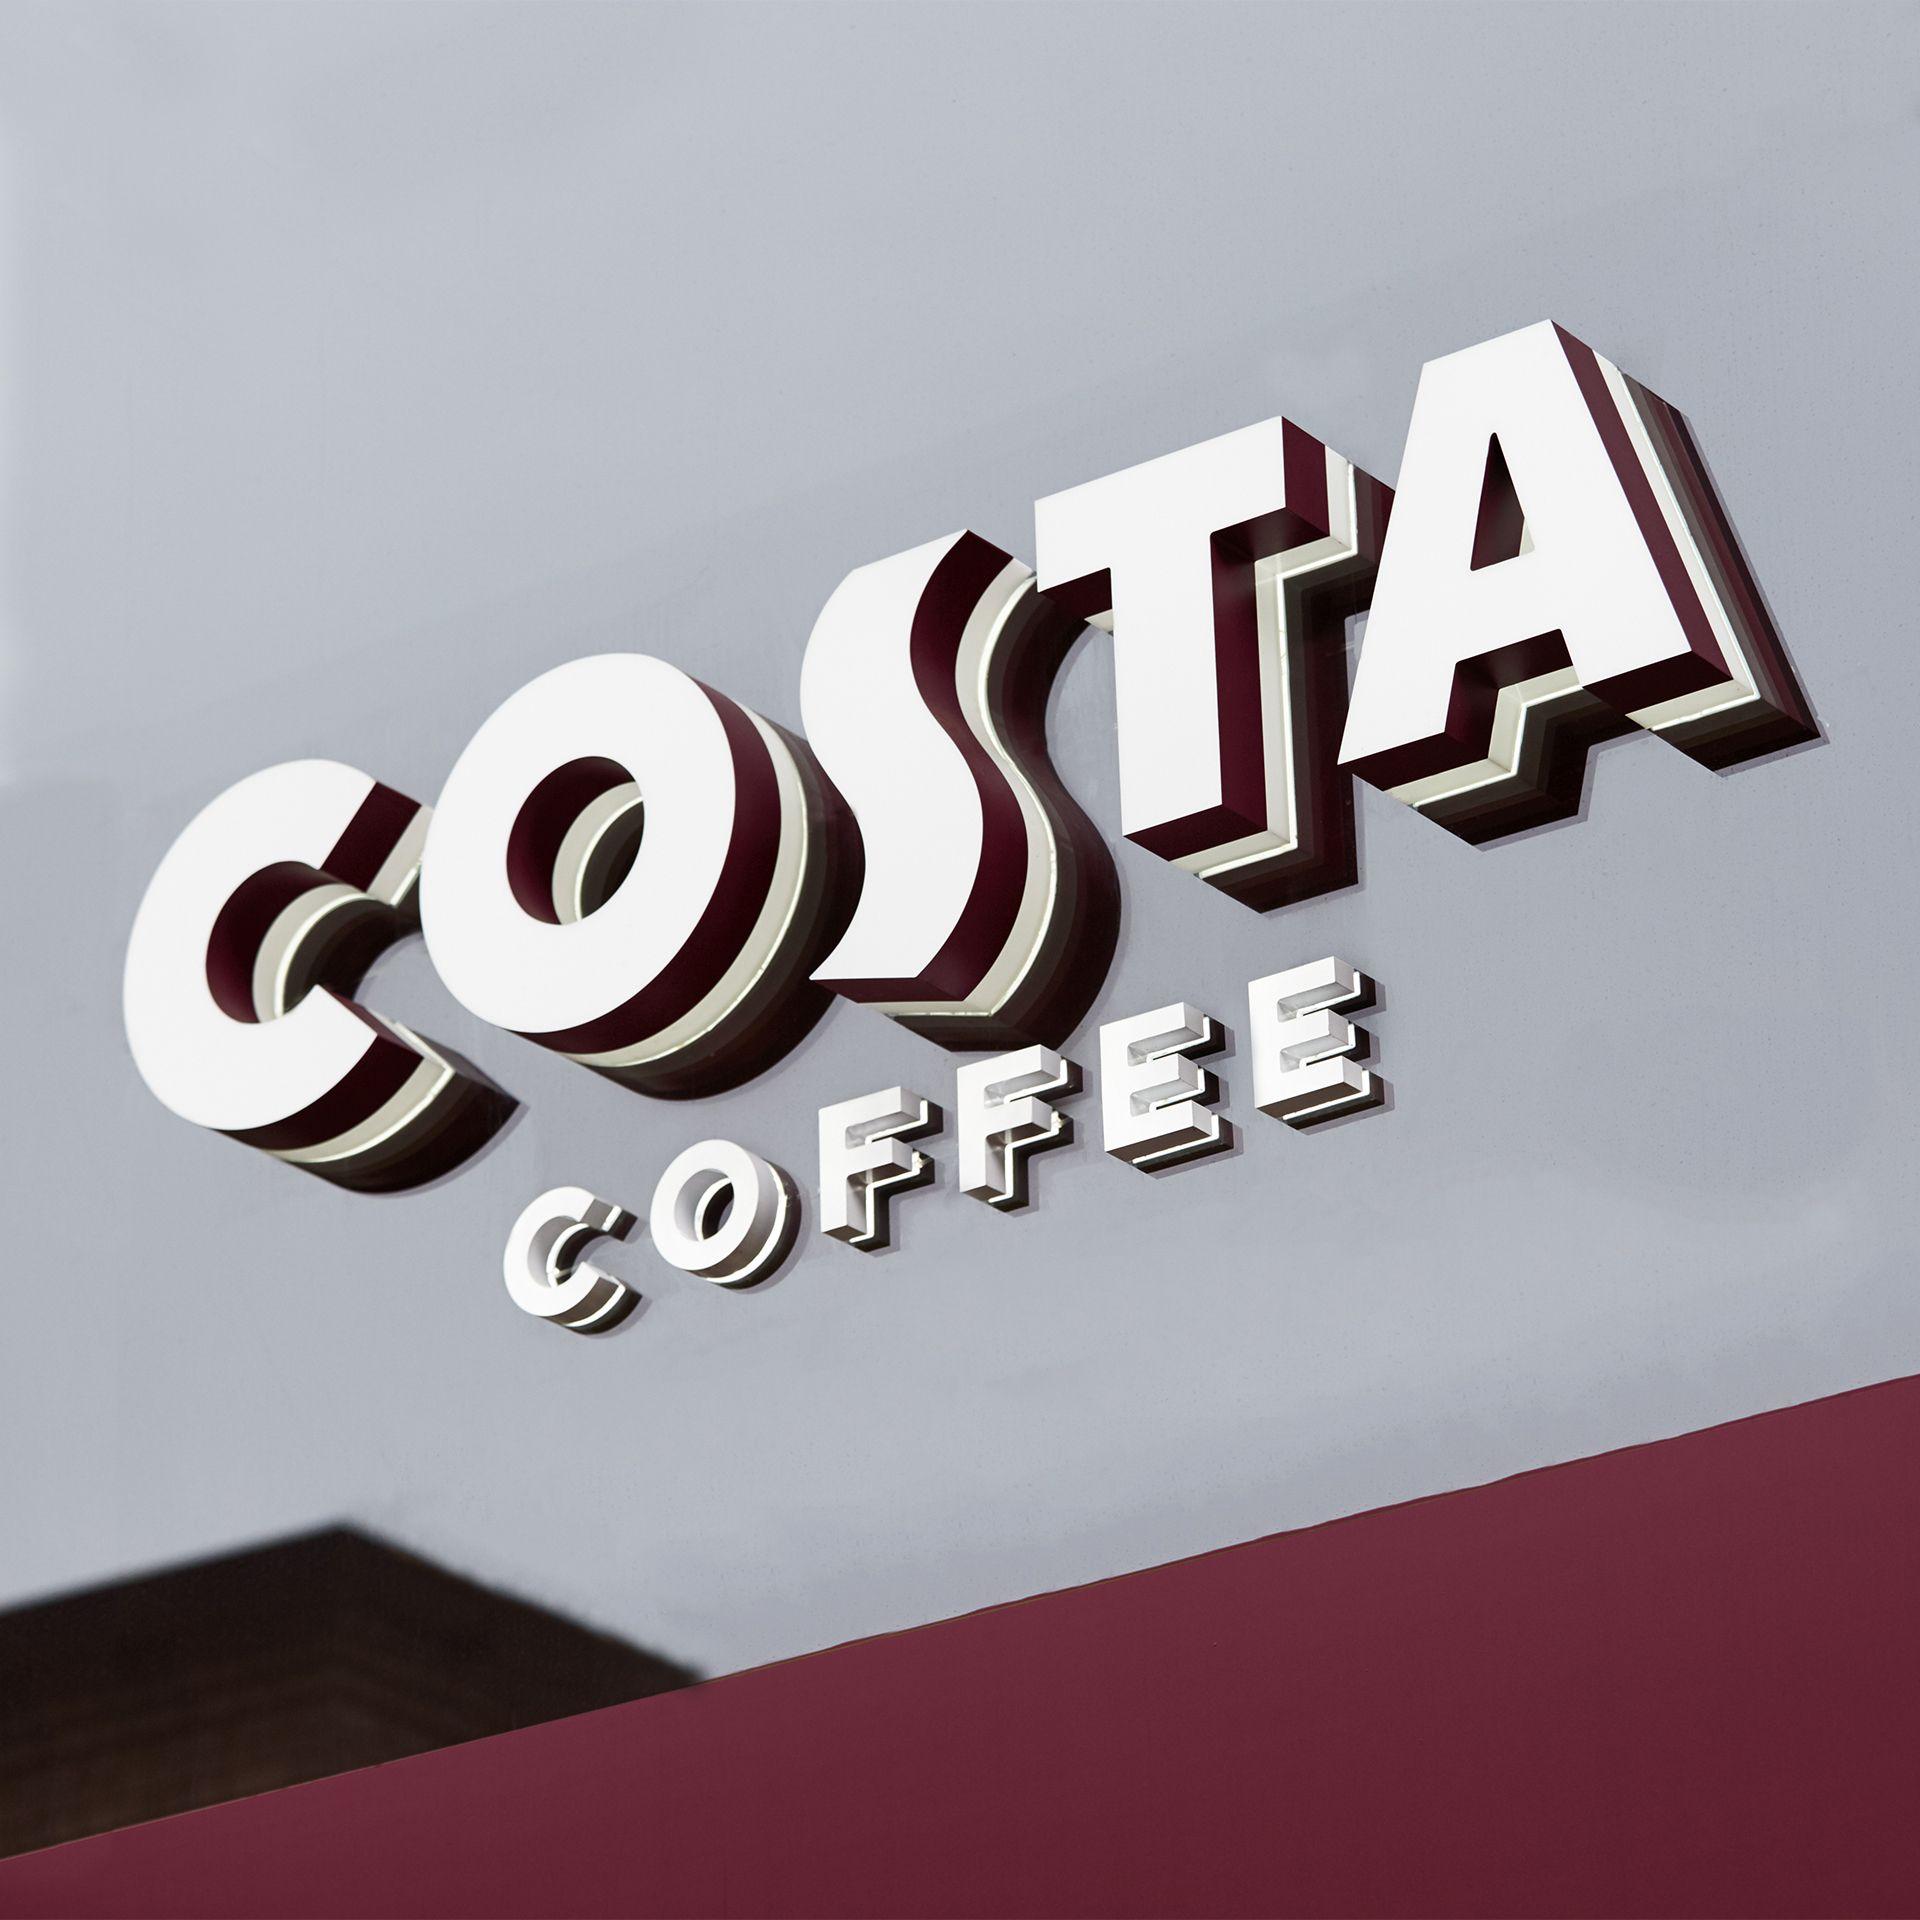 Costa Logo - COSTA COFFEE, GLOBAL BRAND IDENTITY | Our Design Agency